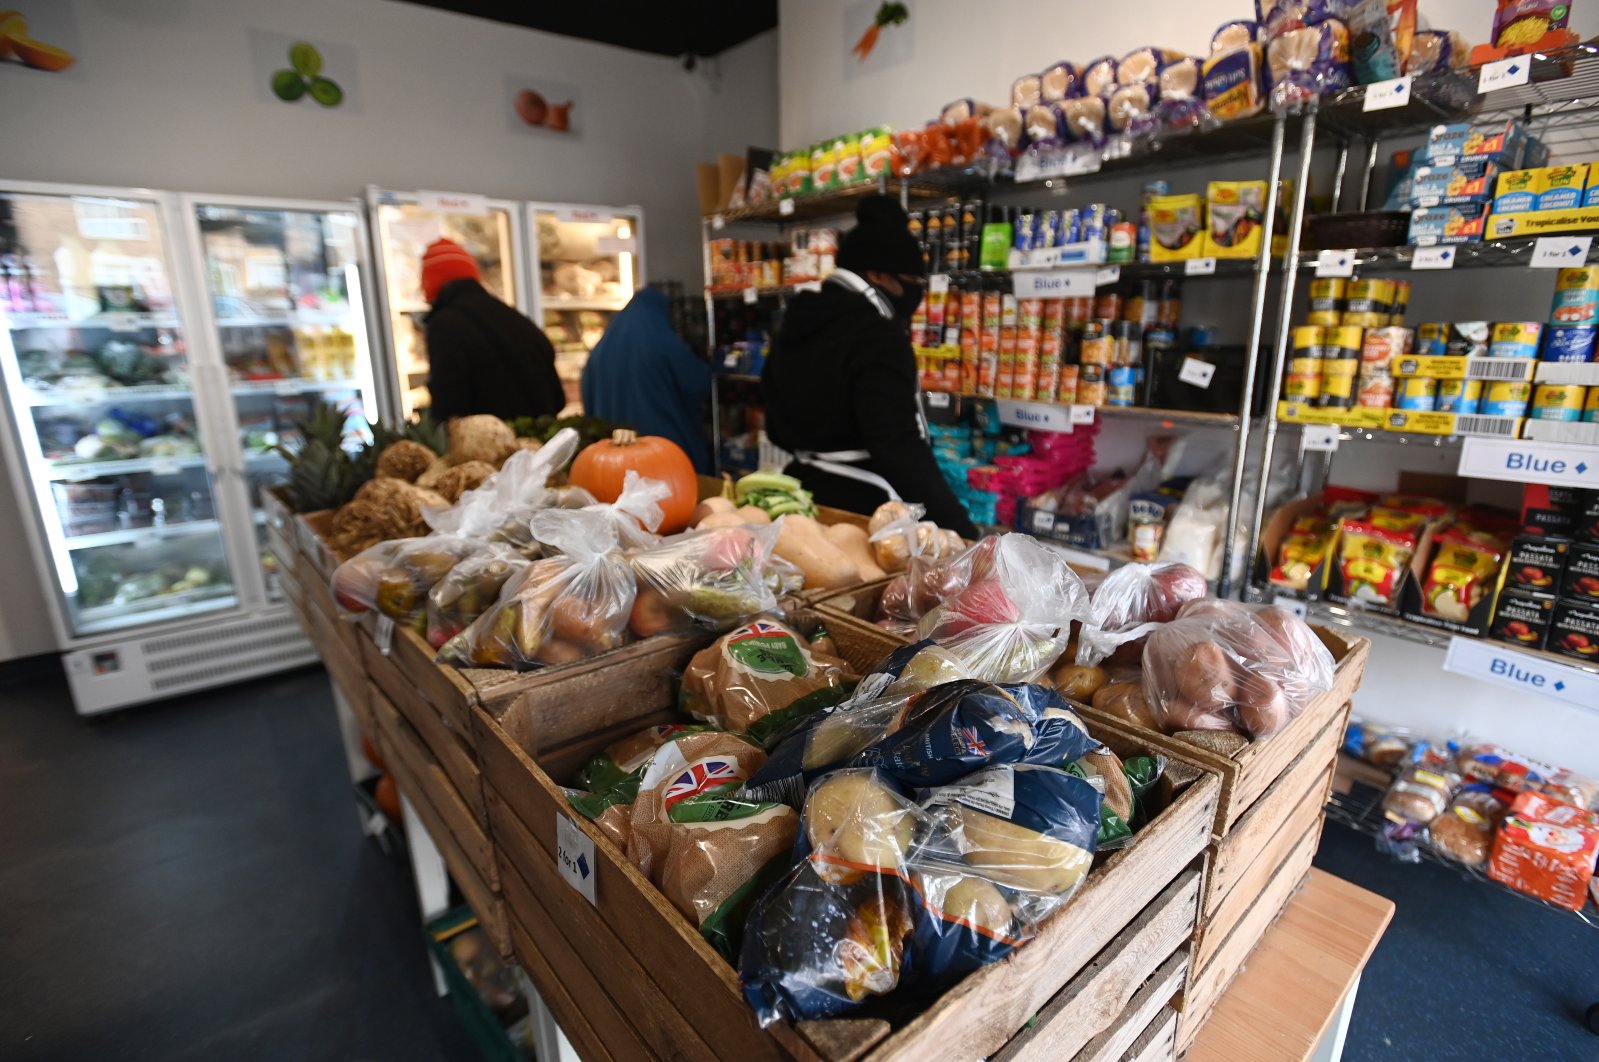 People shop at a market in London, Britain, Dec. 8, 2021. (EPA Photo)